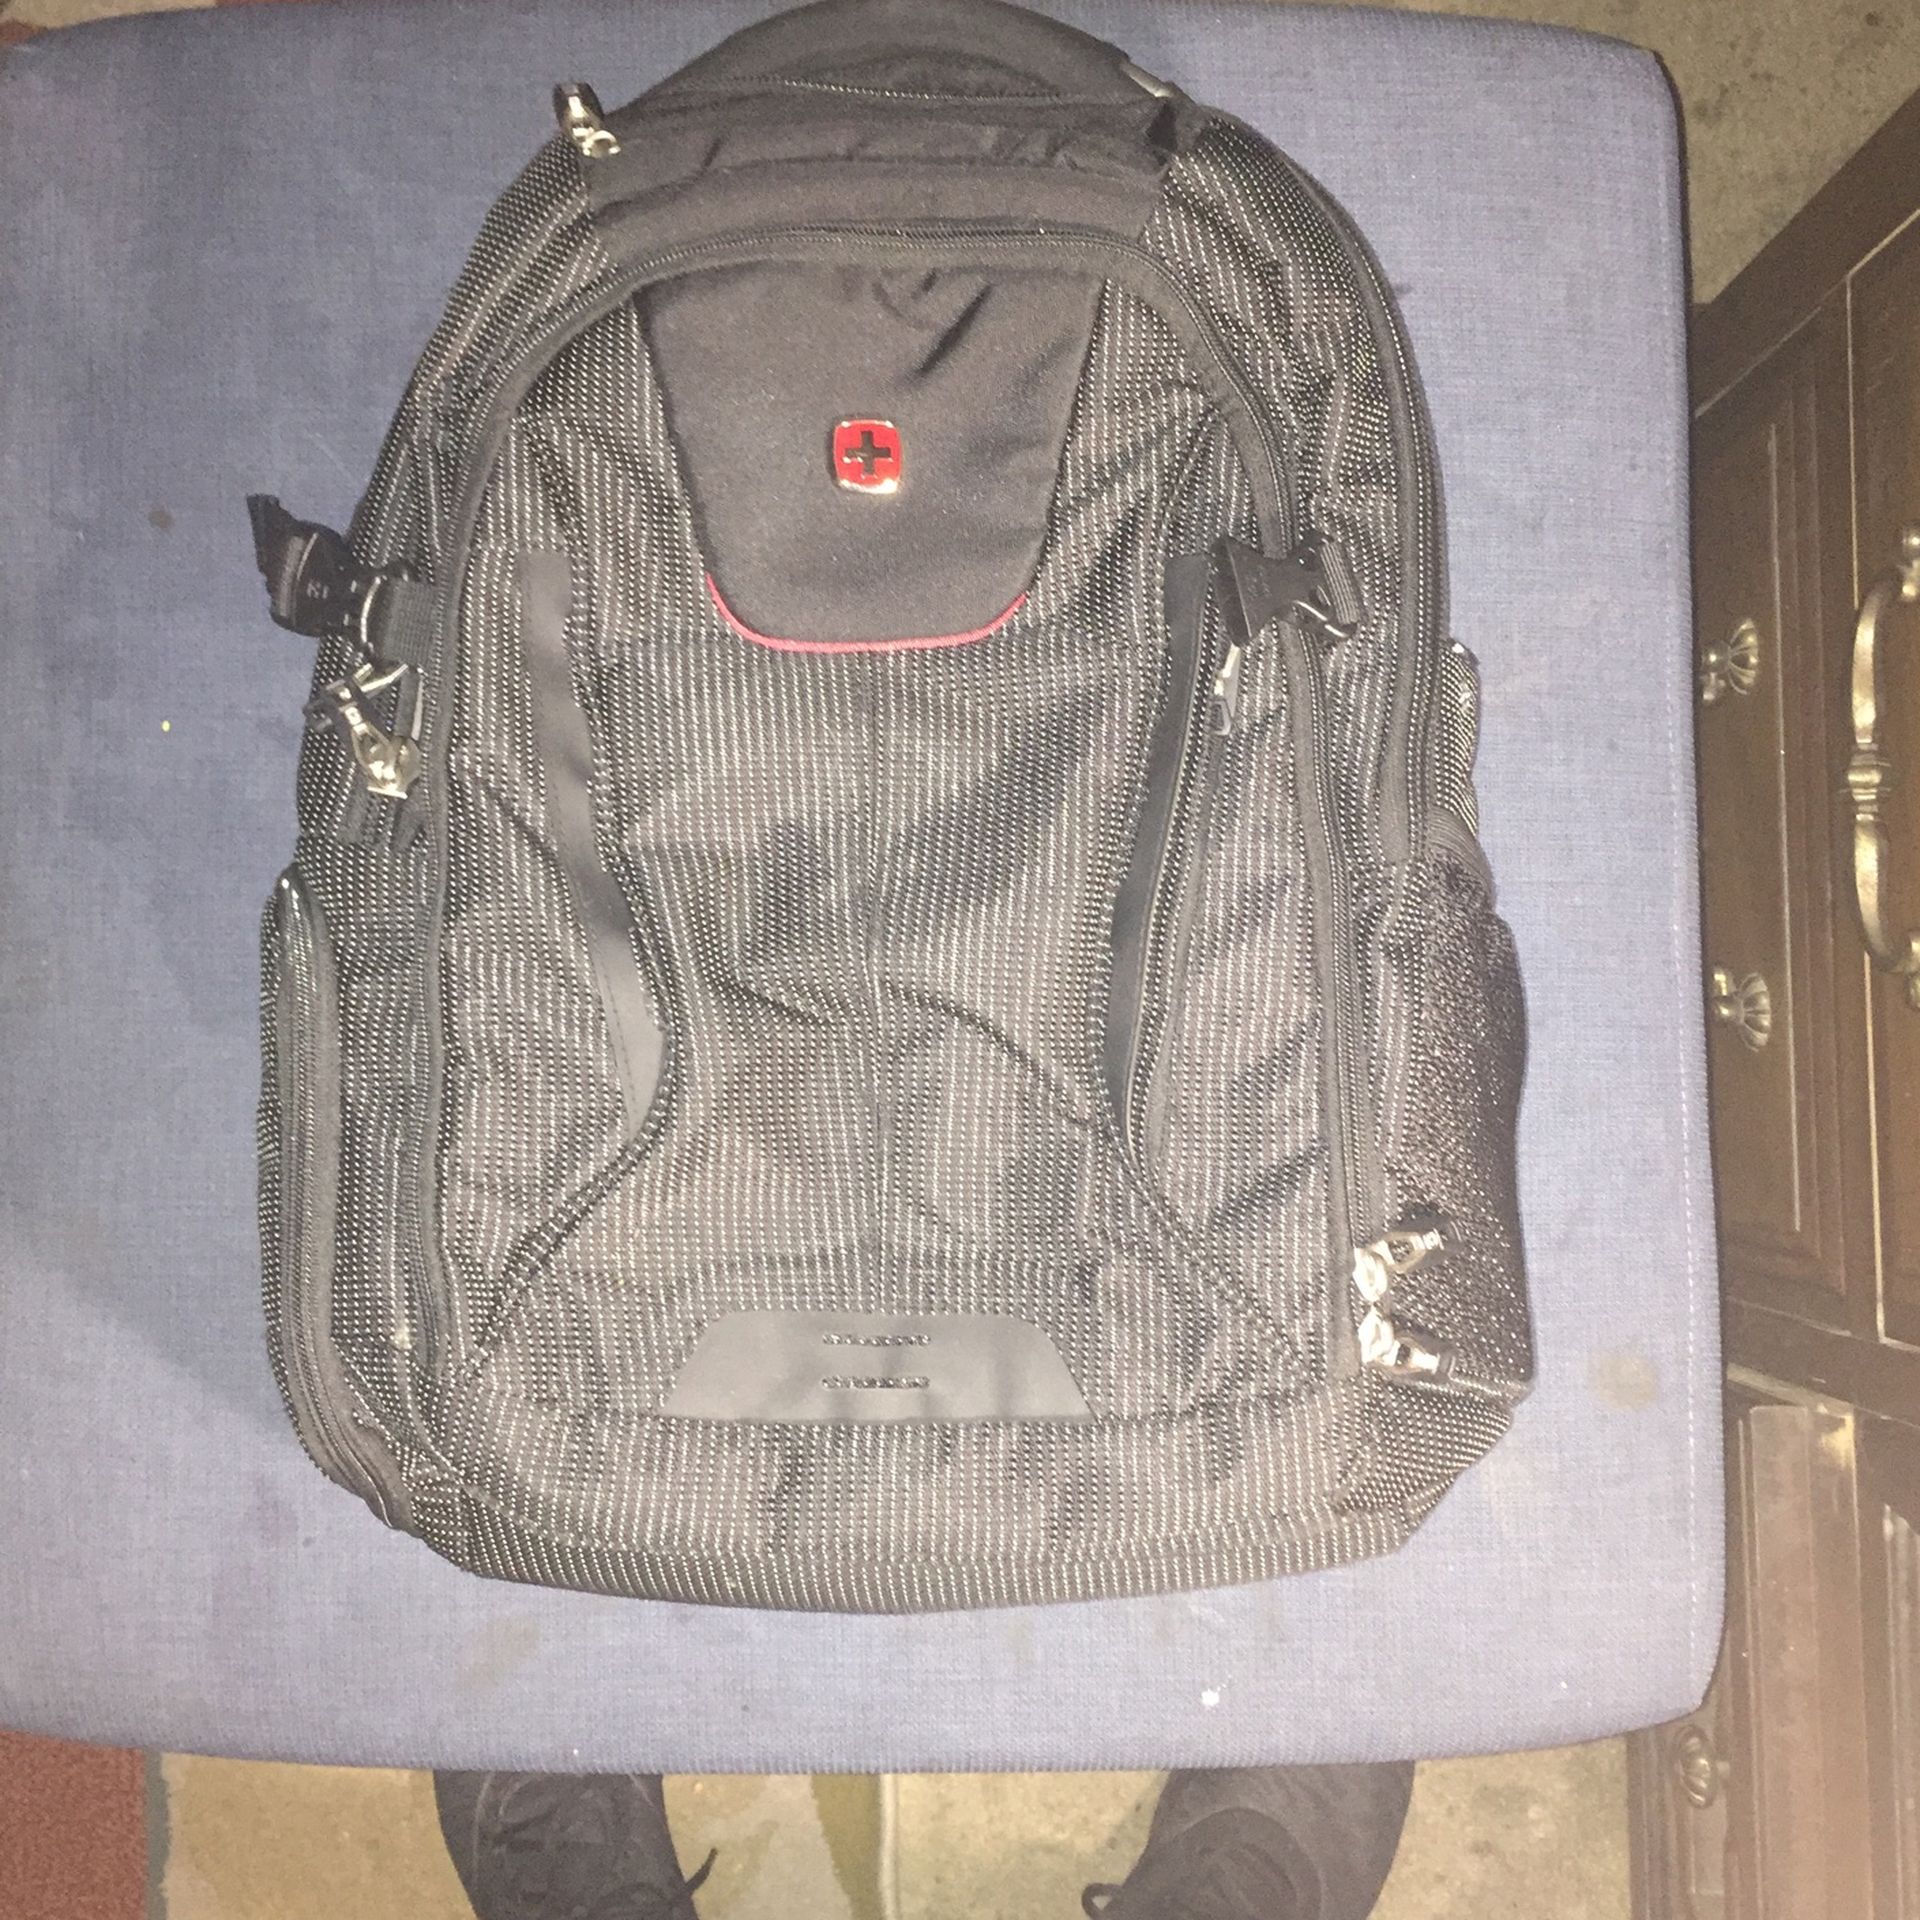 Newer Swiss Gear Backpack